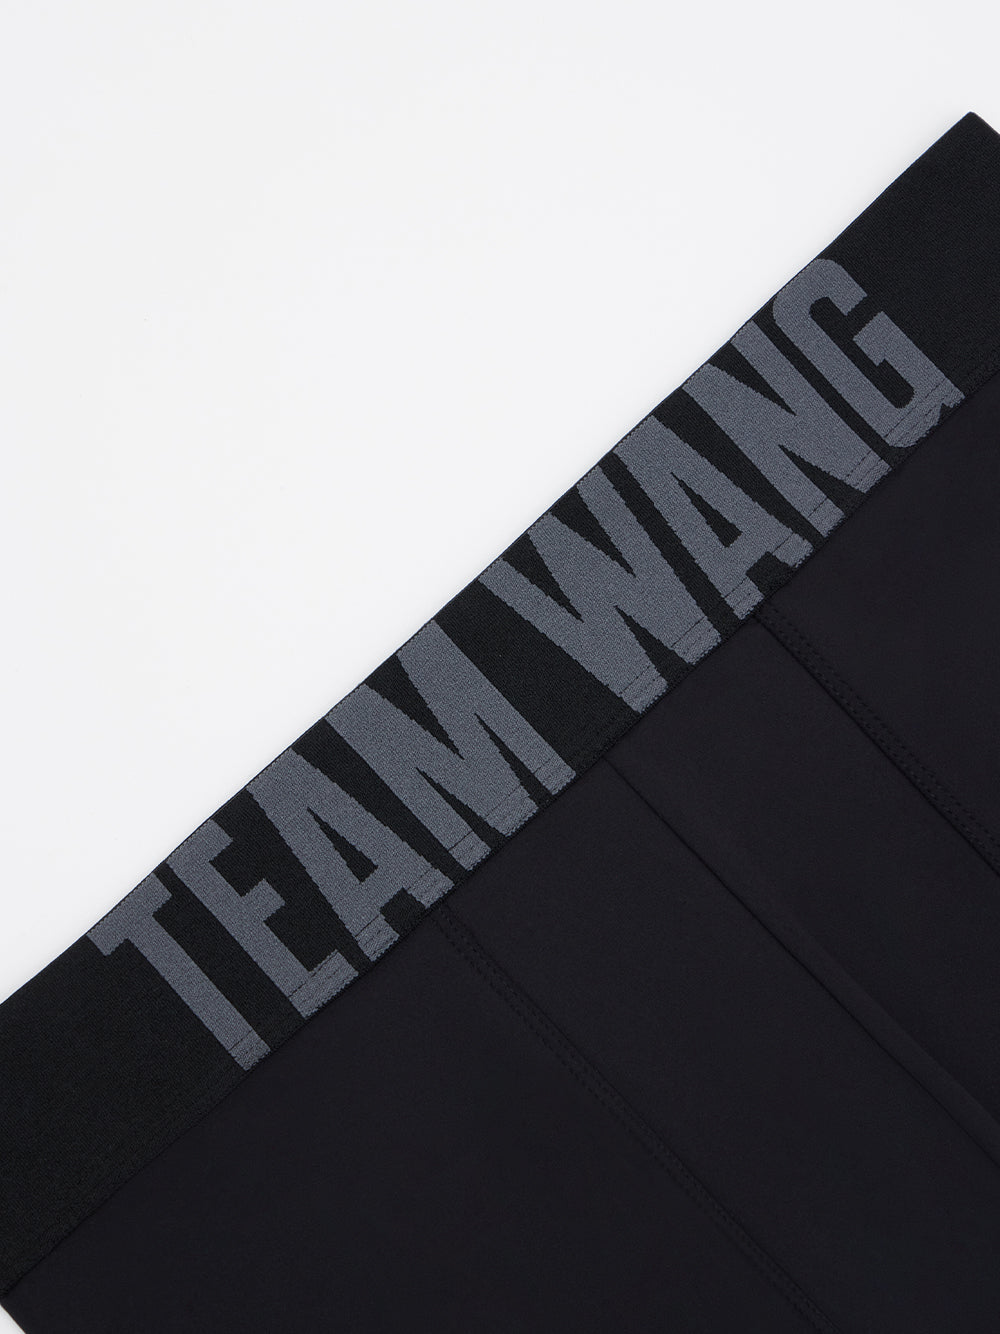 Team-Wang-Design-THE-ORIGINAL-1-Boxer-Shorts-Black-5